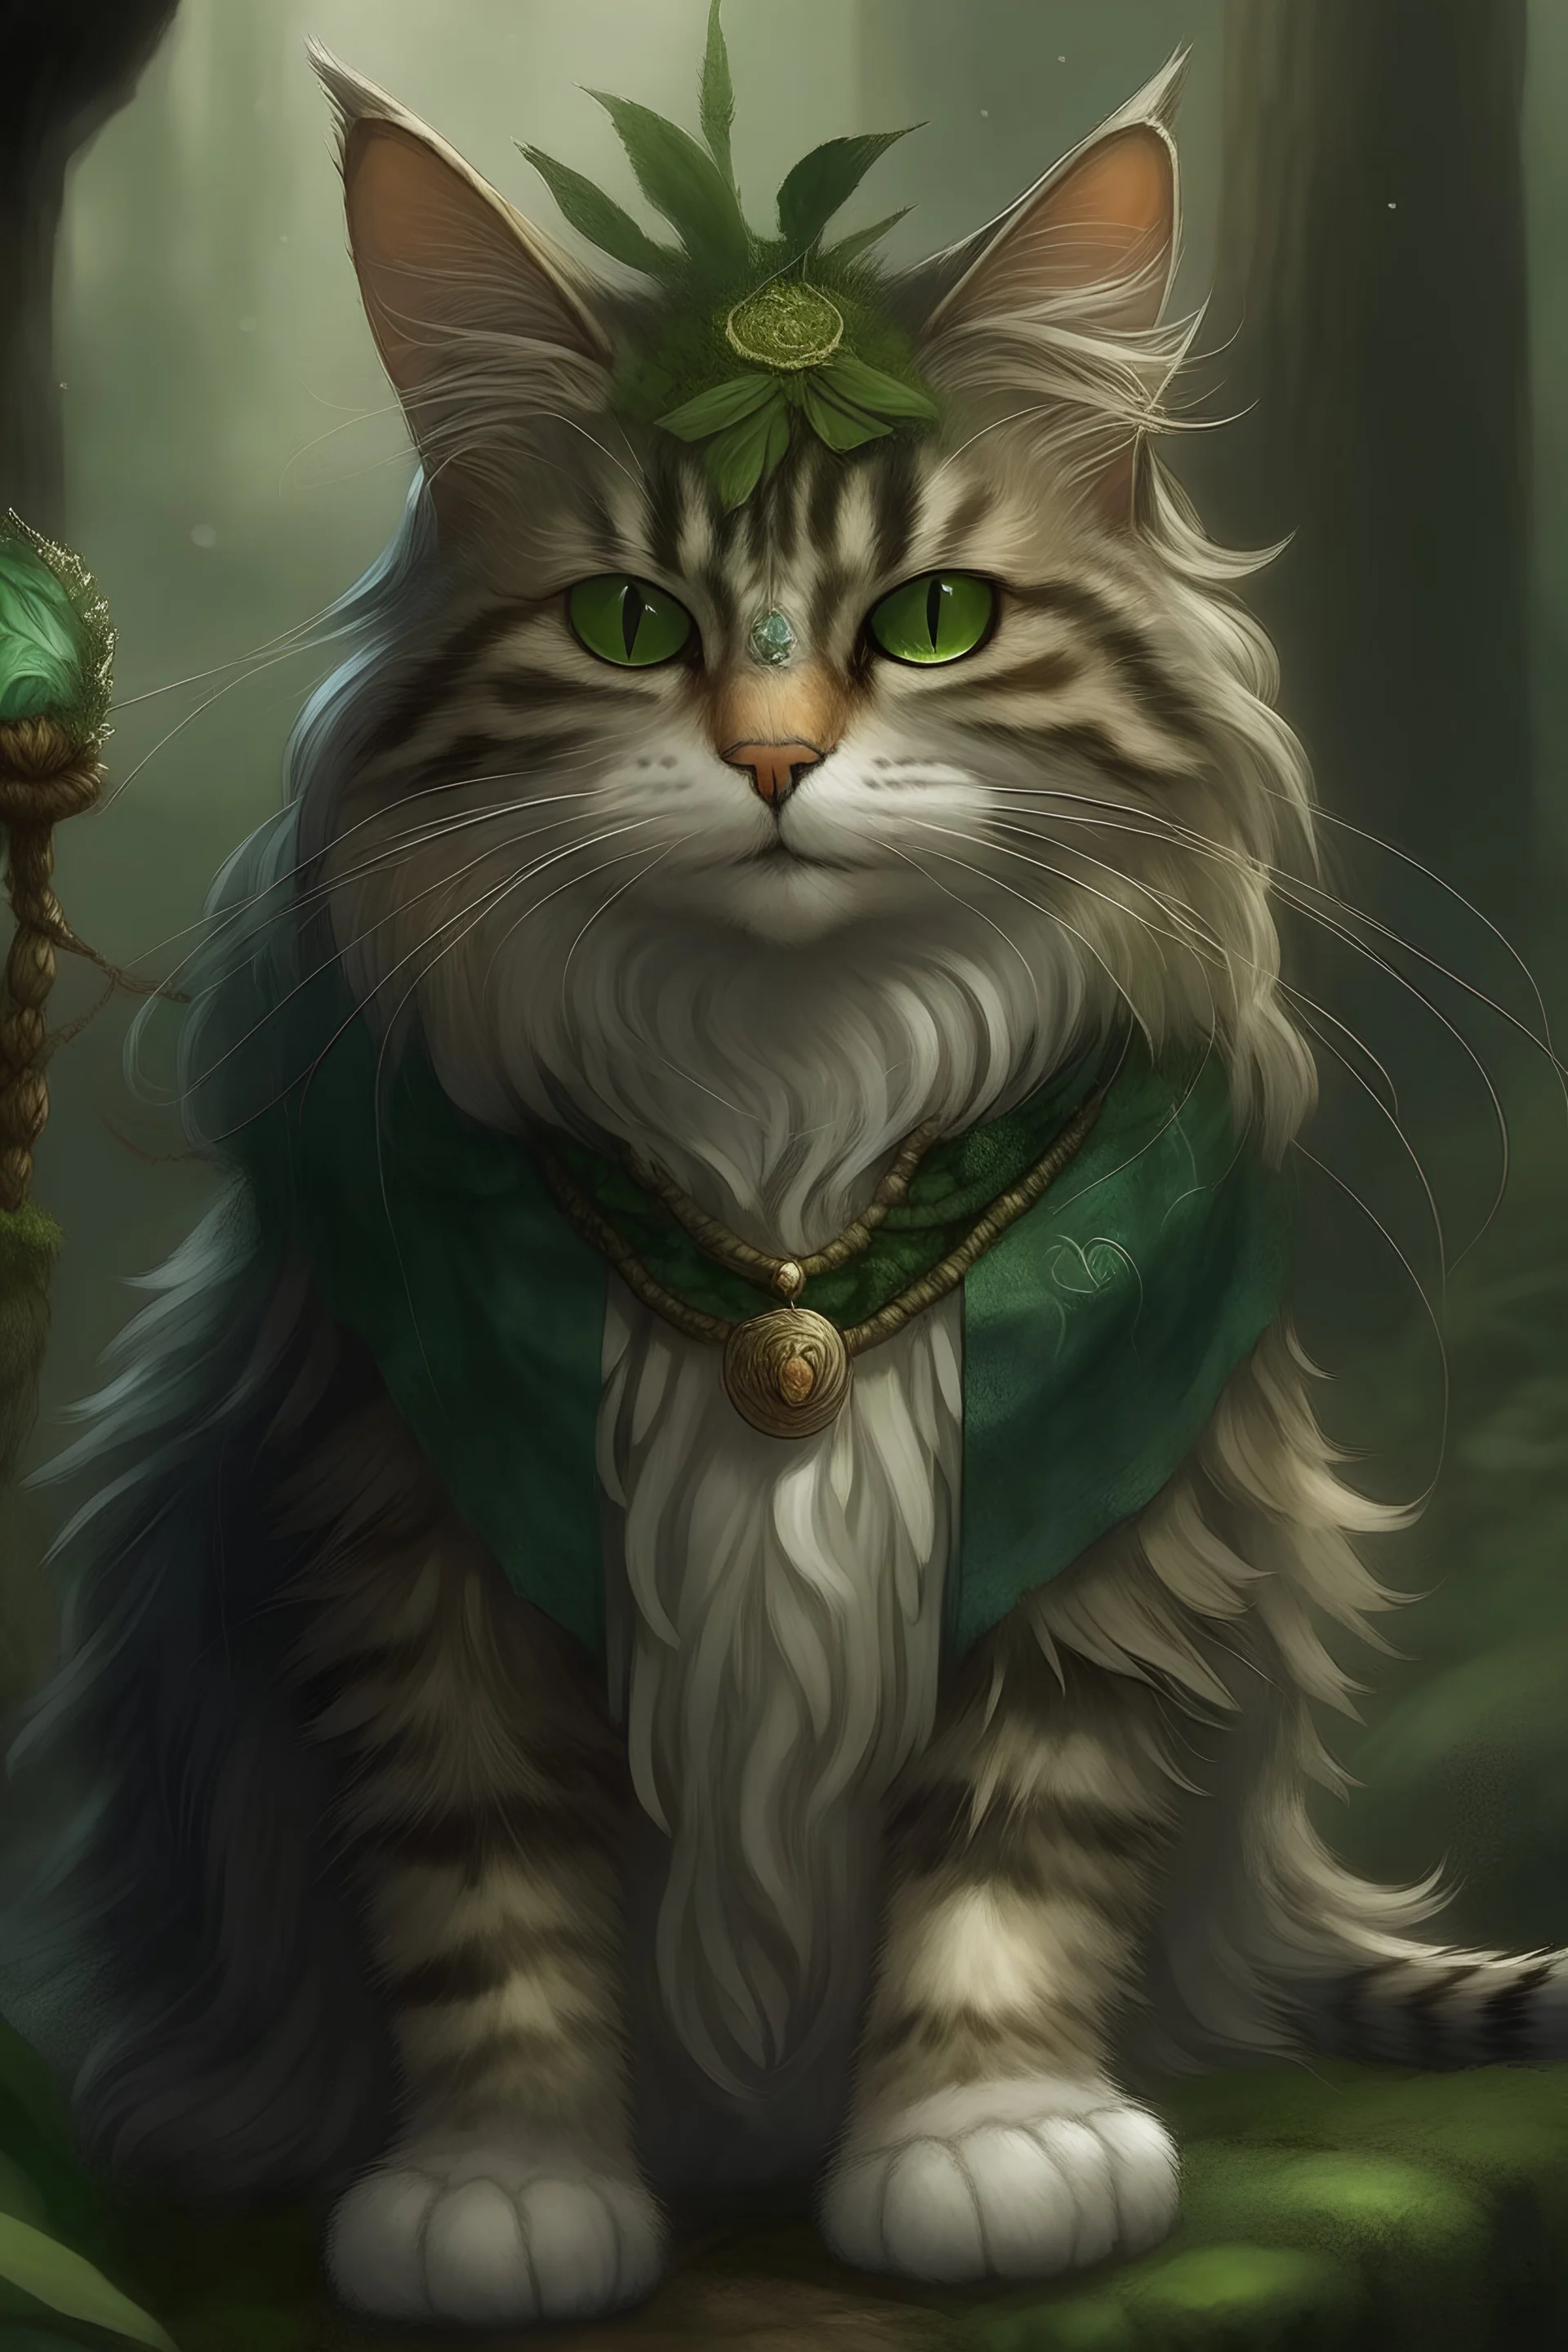 A cat of a druid